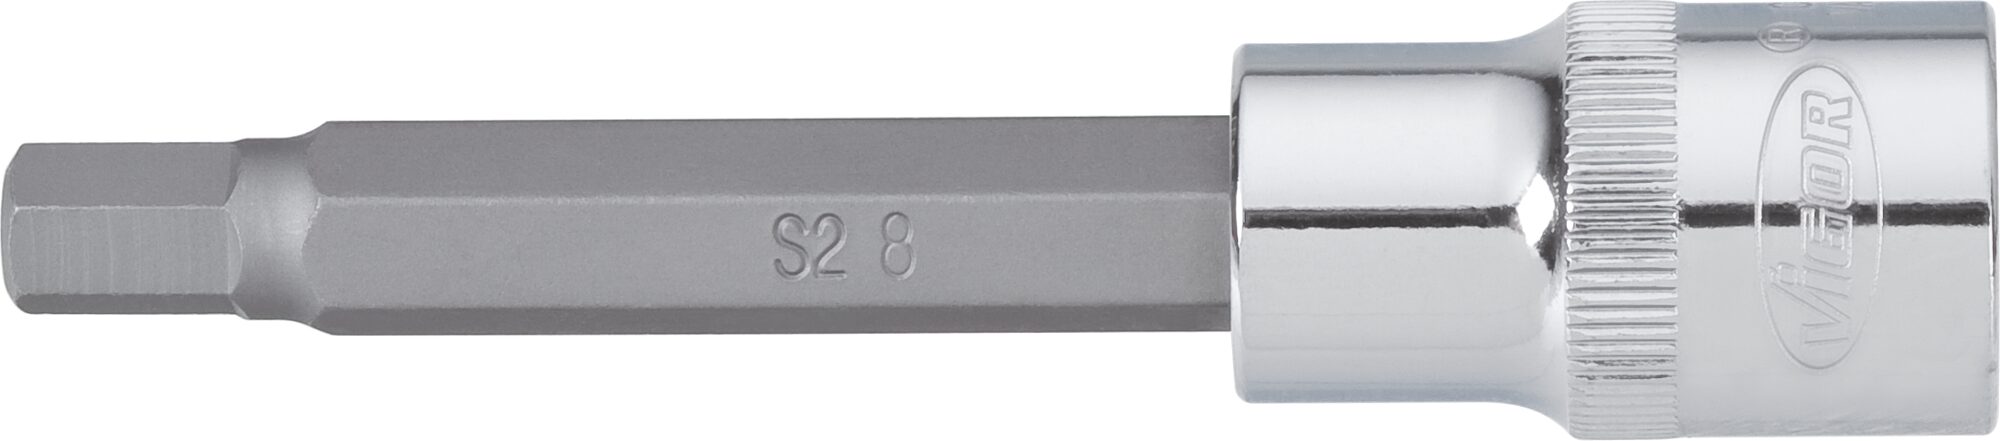 VIGOR Innensechskant Schraubendreher-Einsatz · V2077 · Vierkant hohl 12,5 mm (1/2 Zoll) · Innen Sechskant Profil · 11 mm